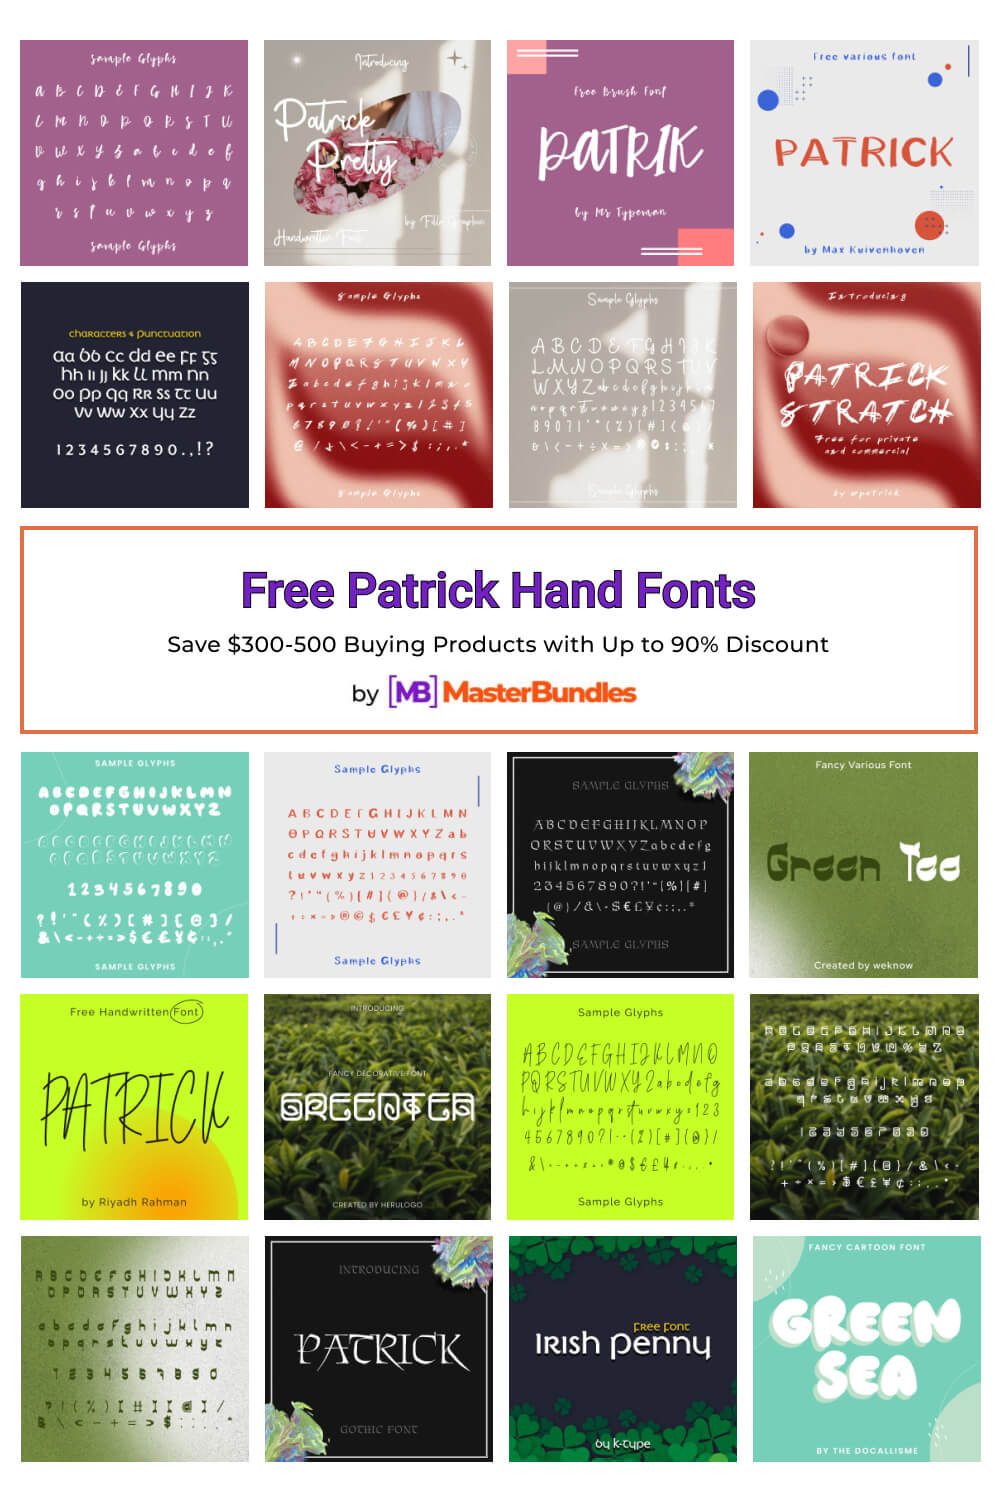 free patrick hand fonts pinterest image.